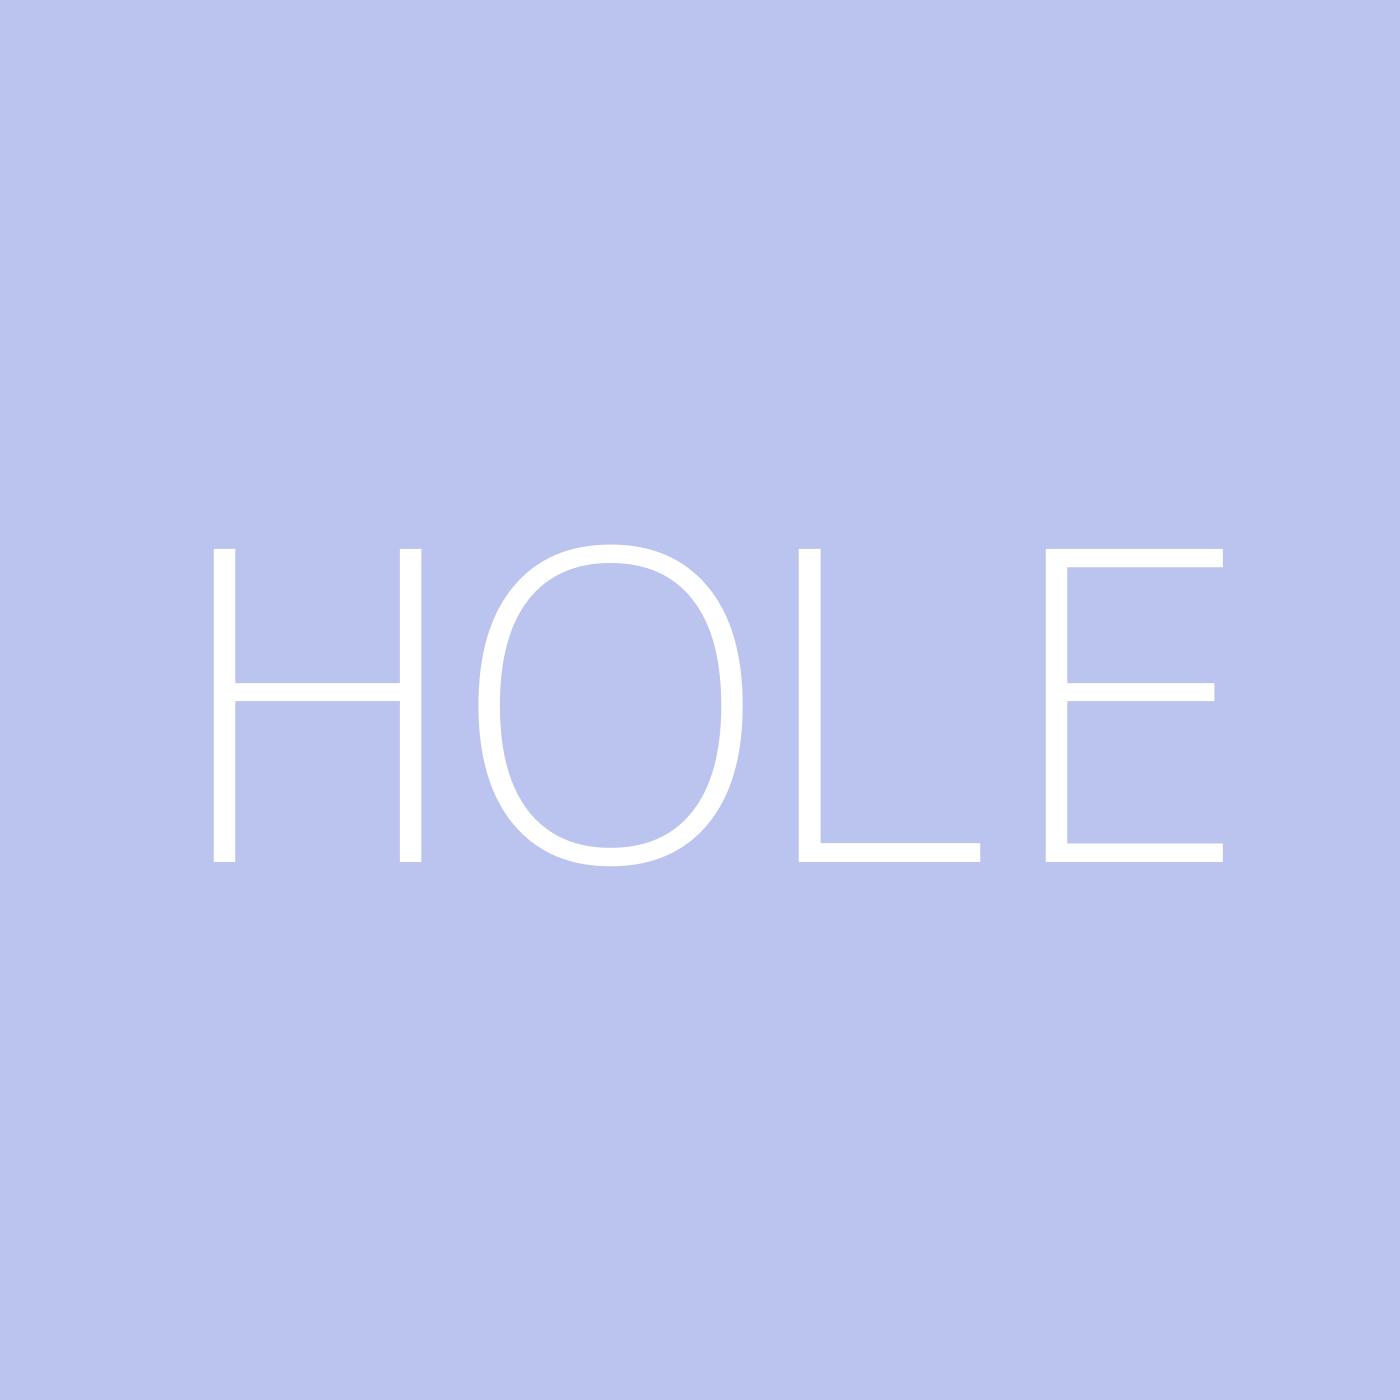 Hole Playlist Artwork